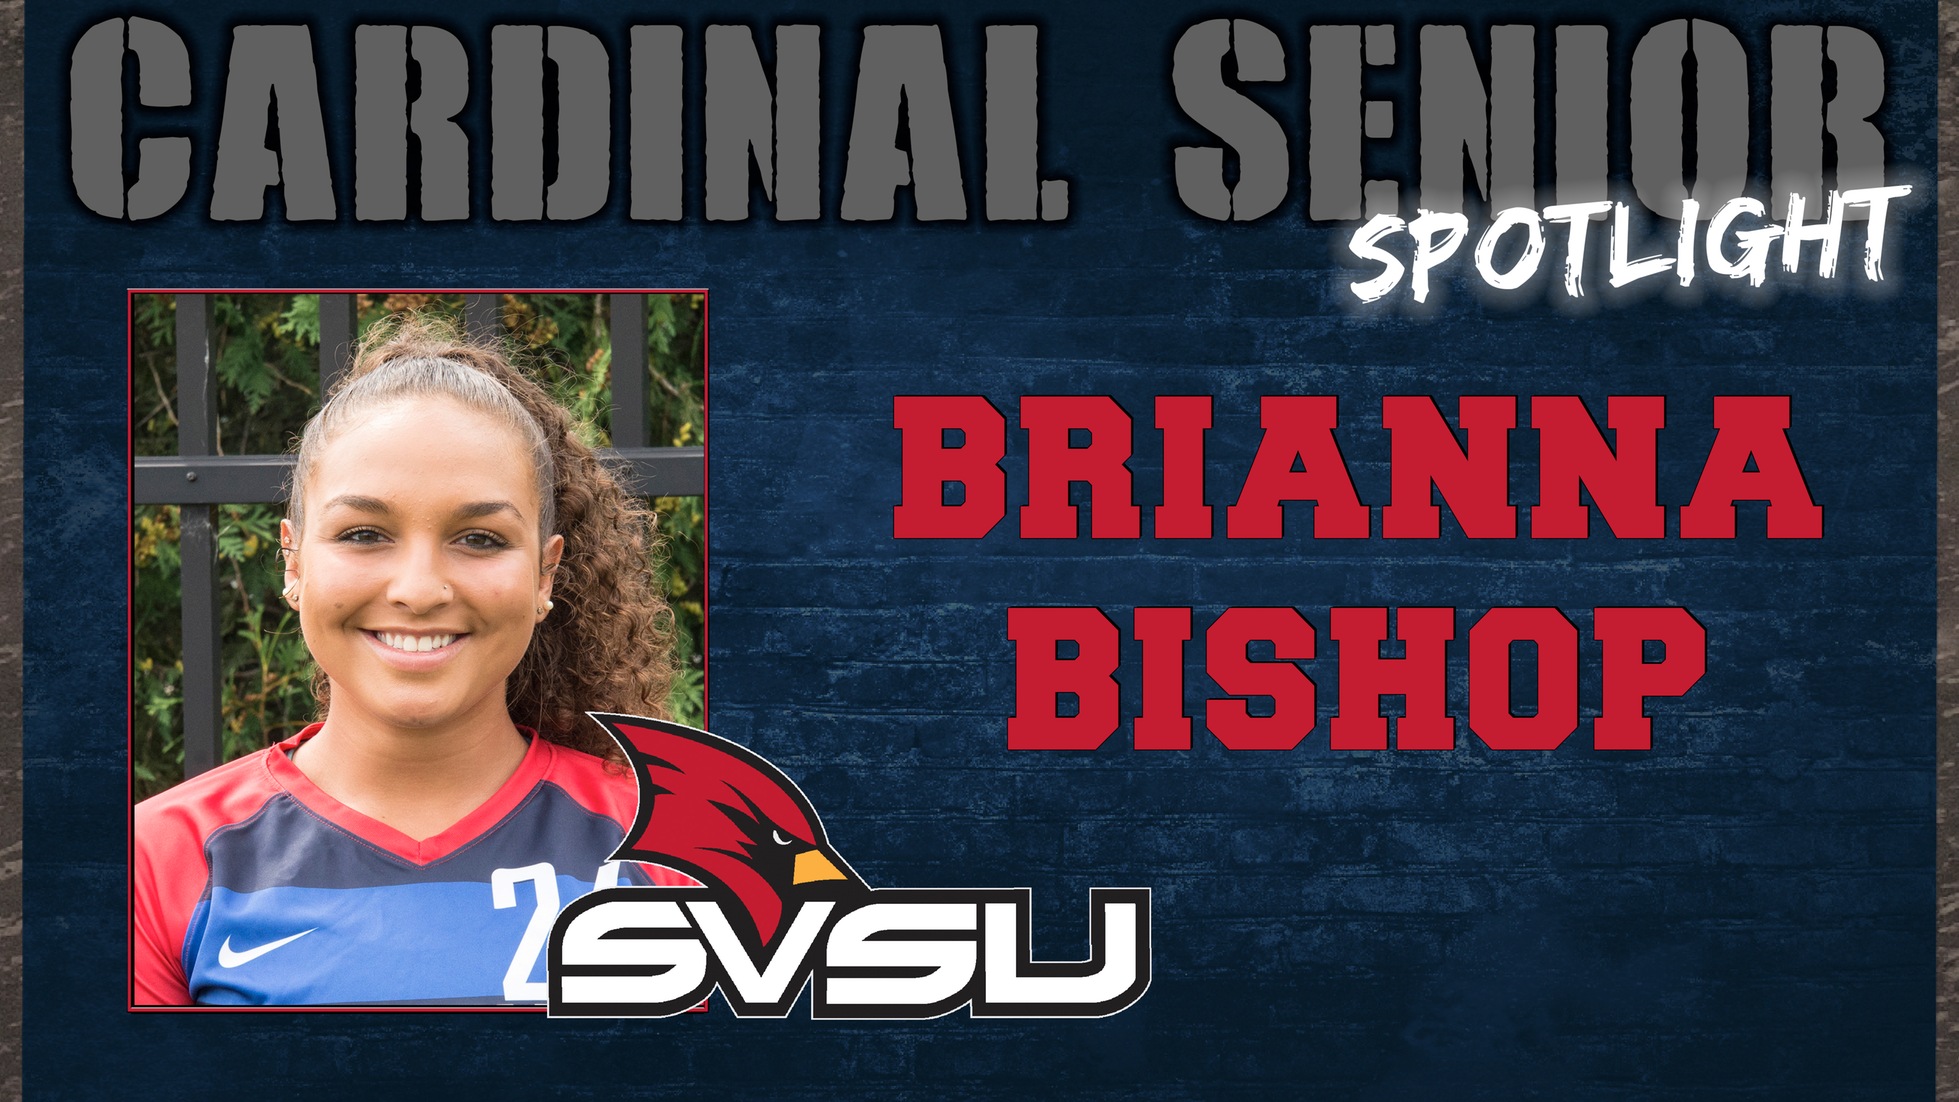 SVSU Cardinal Senior Spotlight - Brianna Bishop